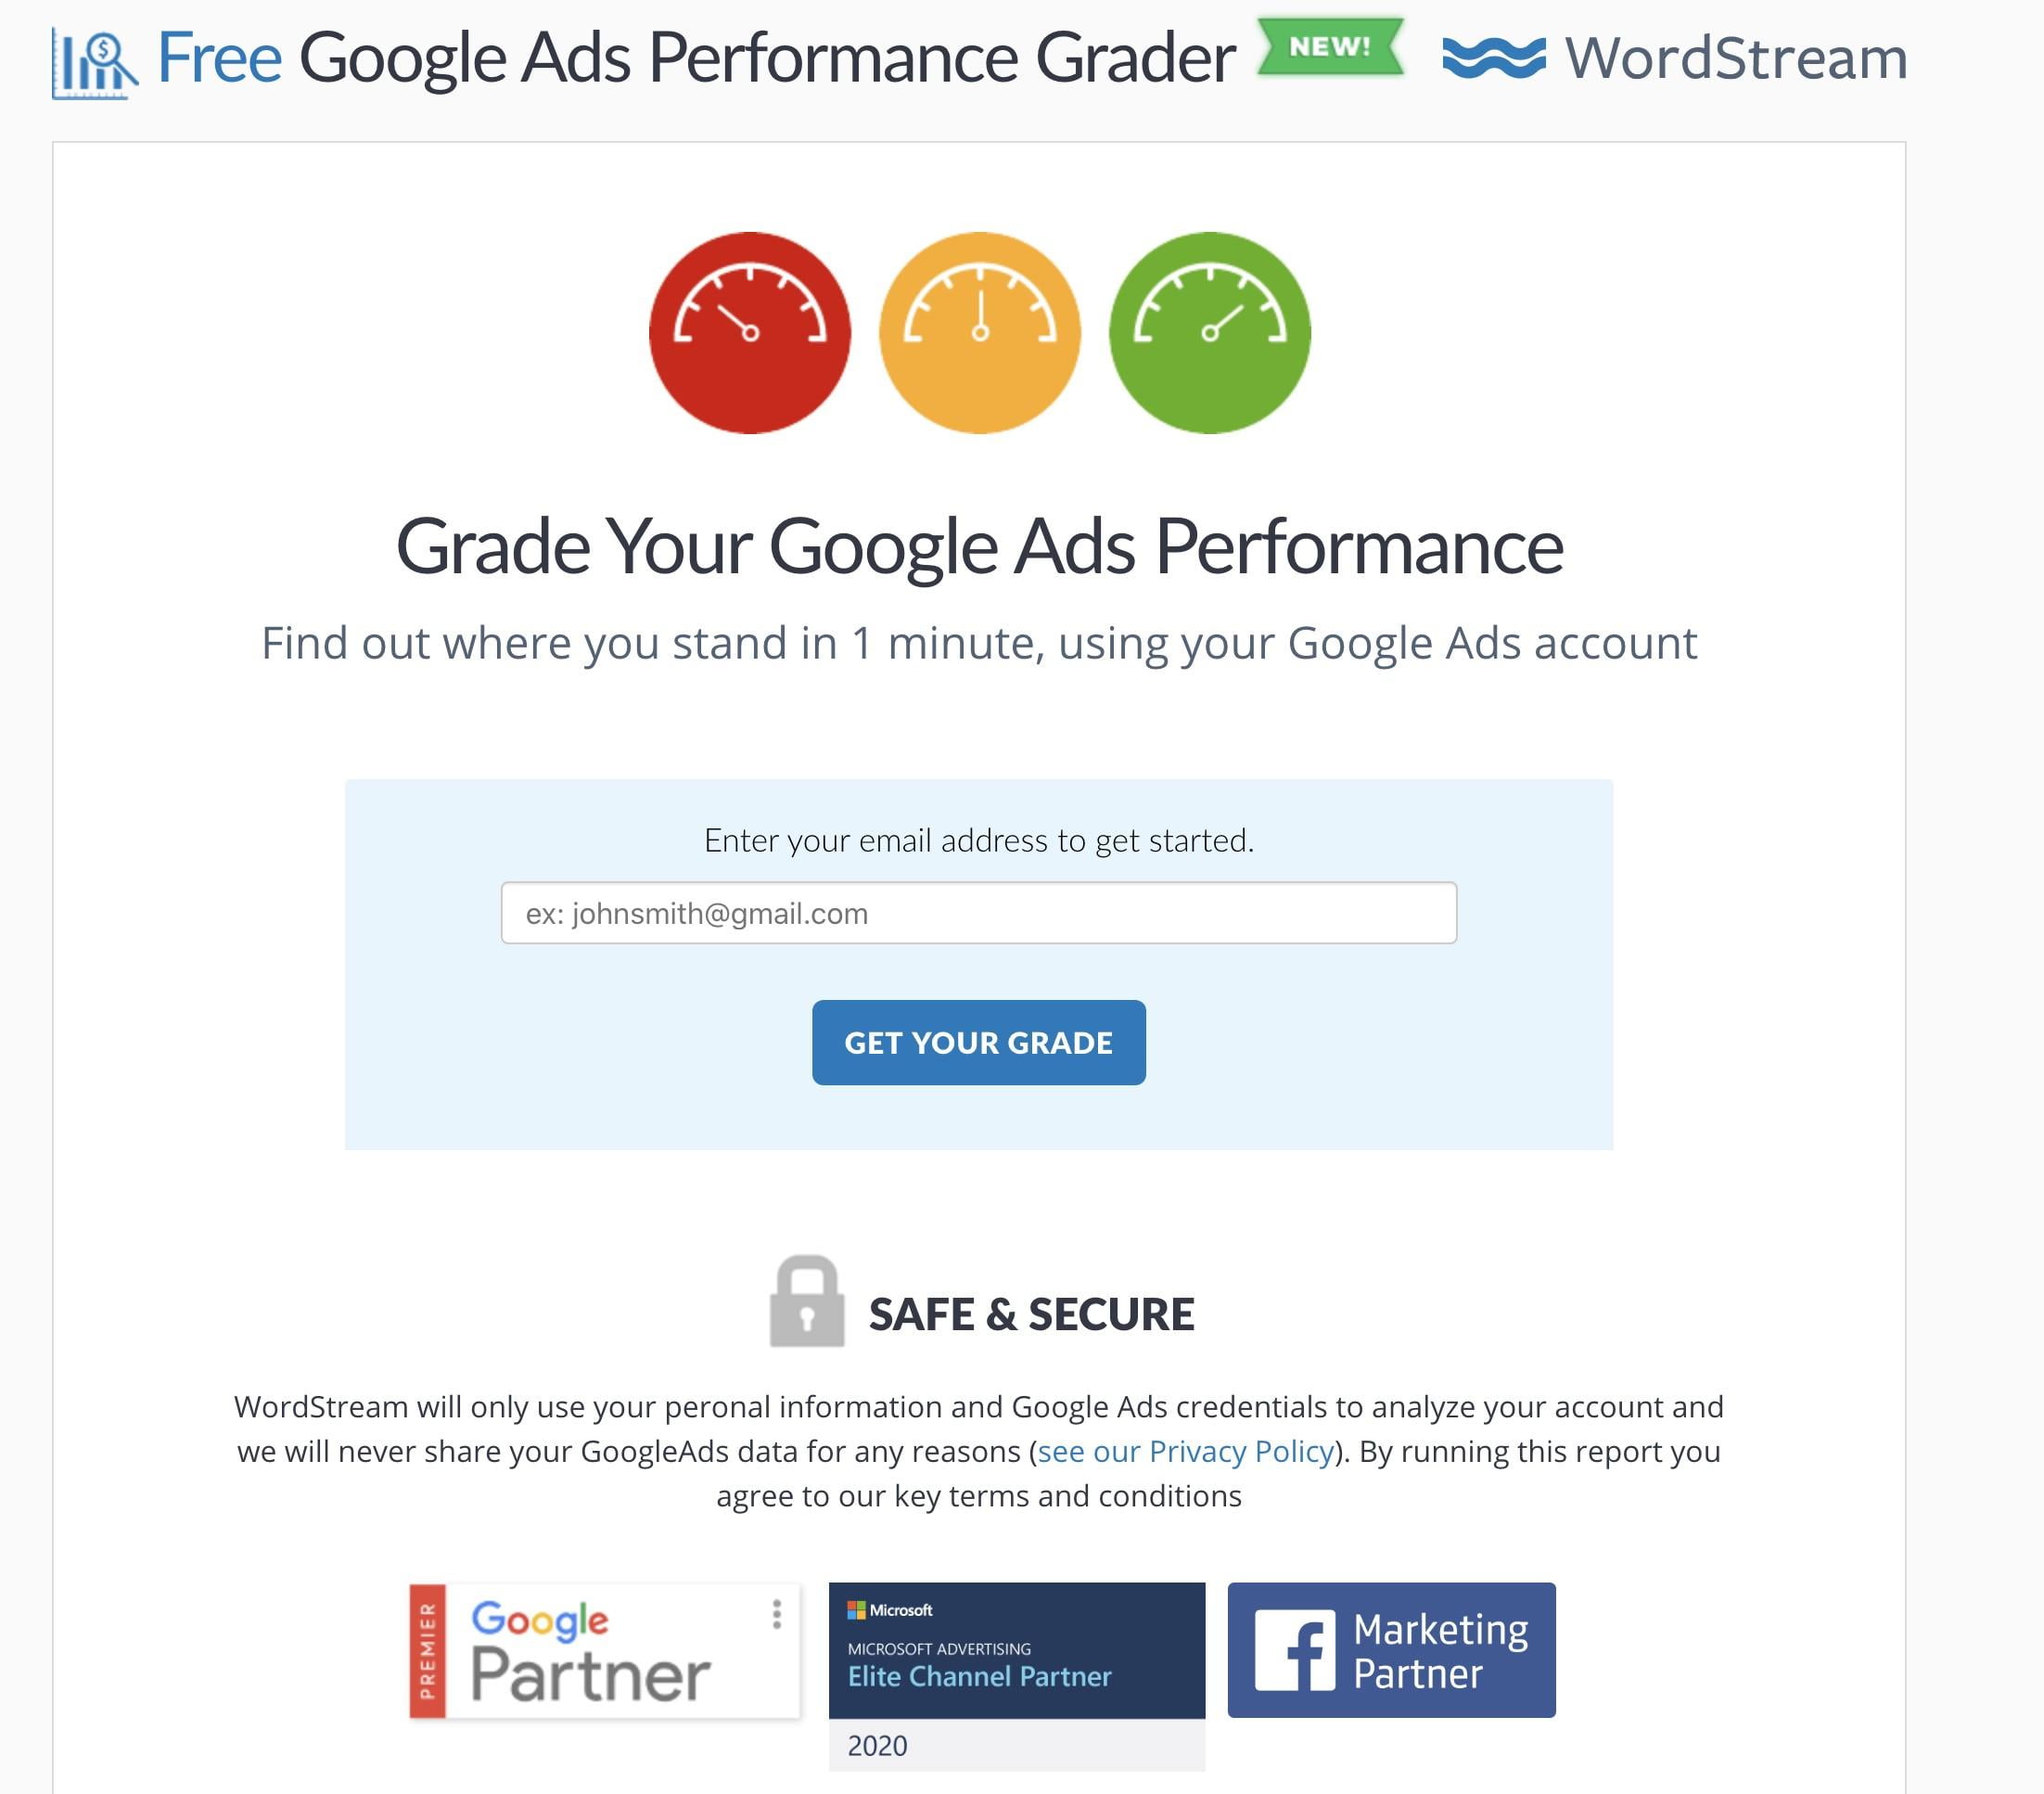 WordStream's Google Ads Grader